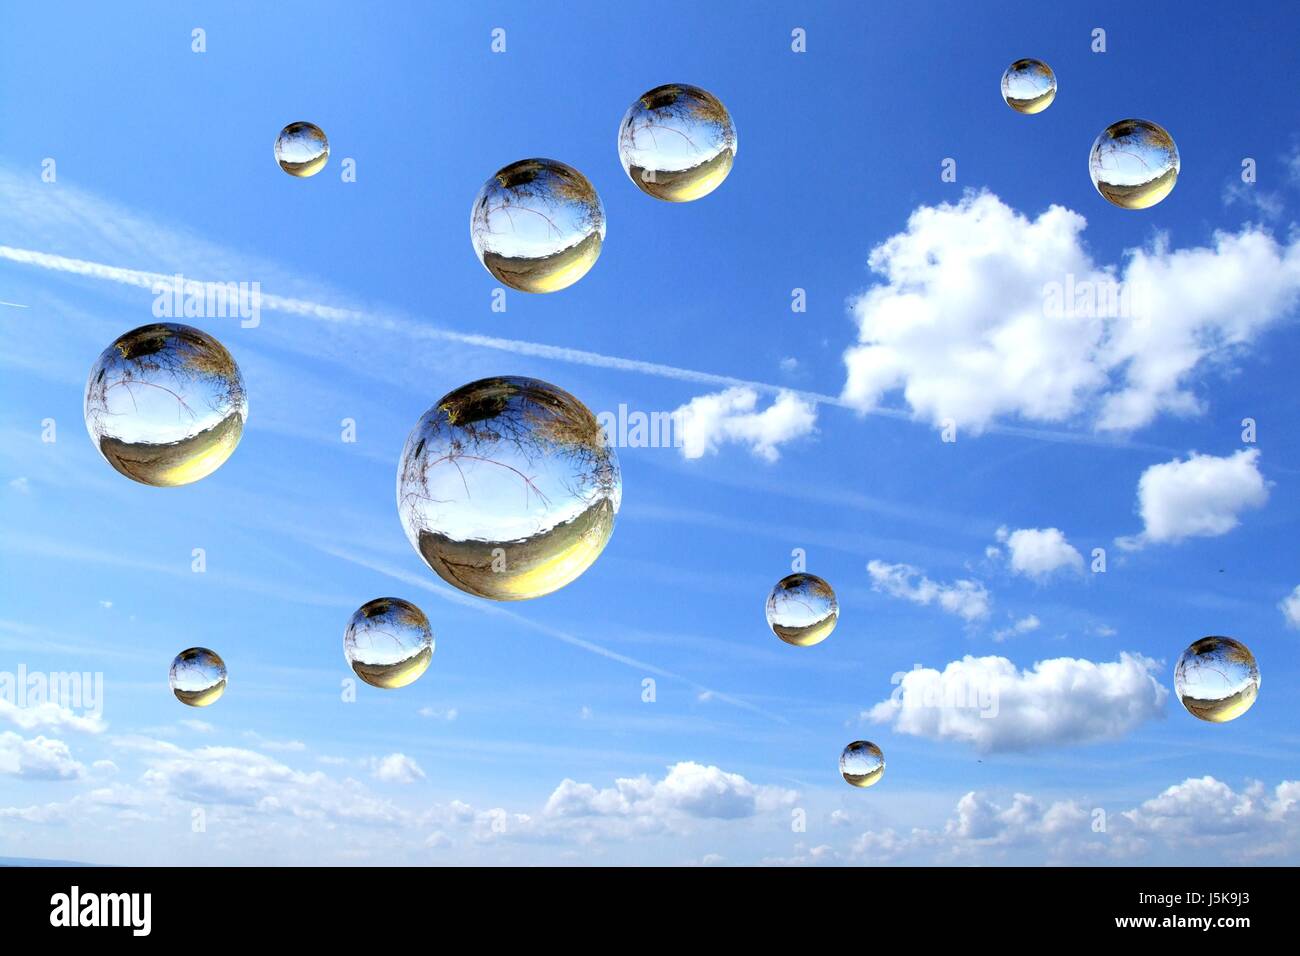 blue bubble soap bubble float bleb firmament sky glass ball heavenly body  Stock Photo - Alamy